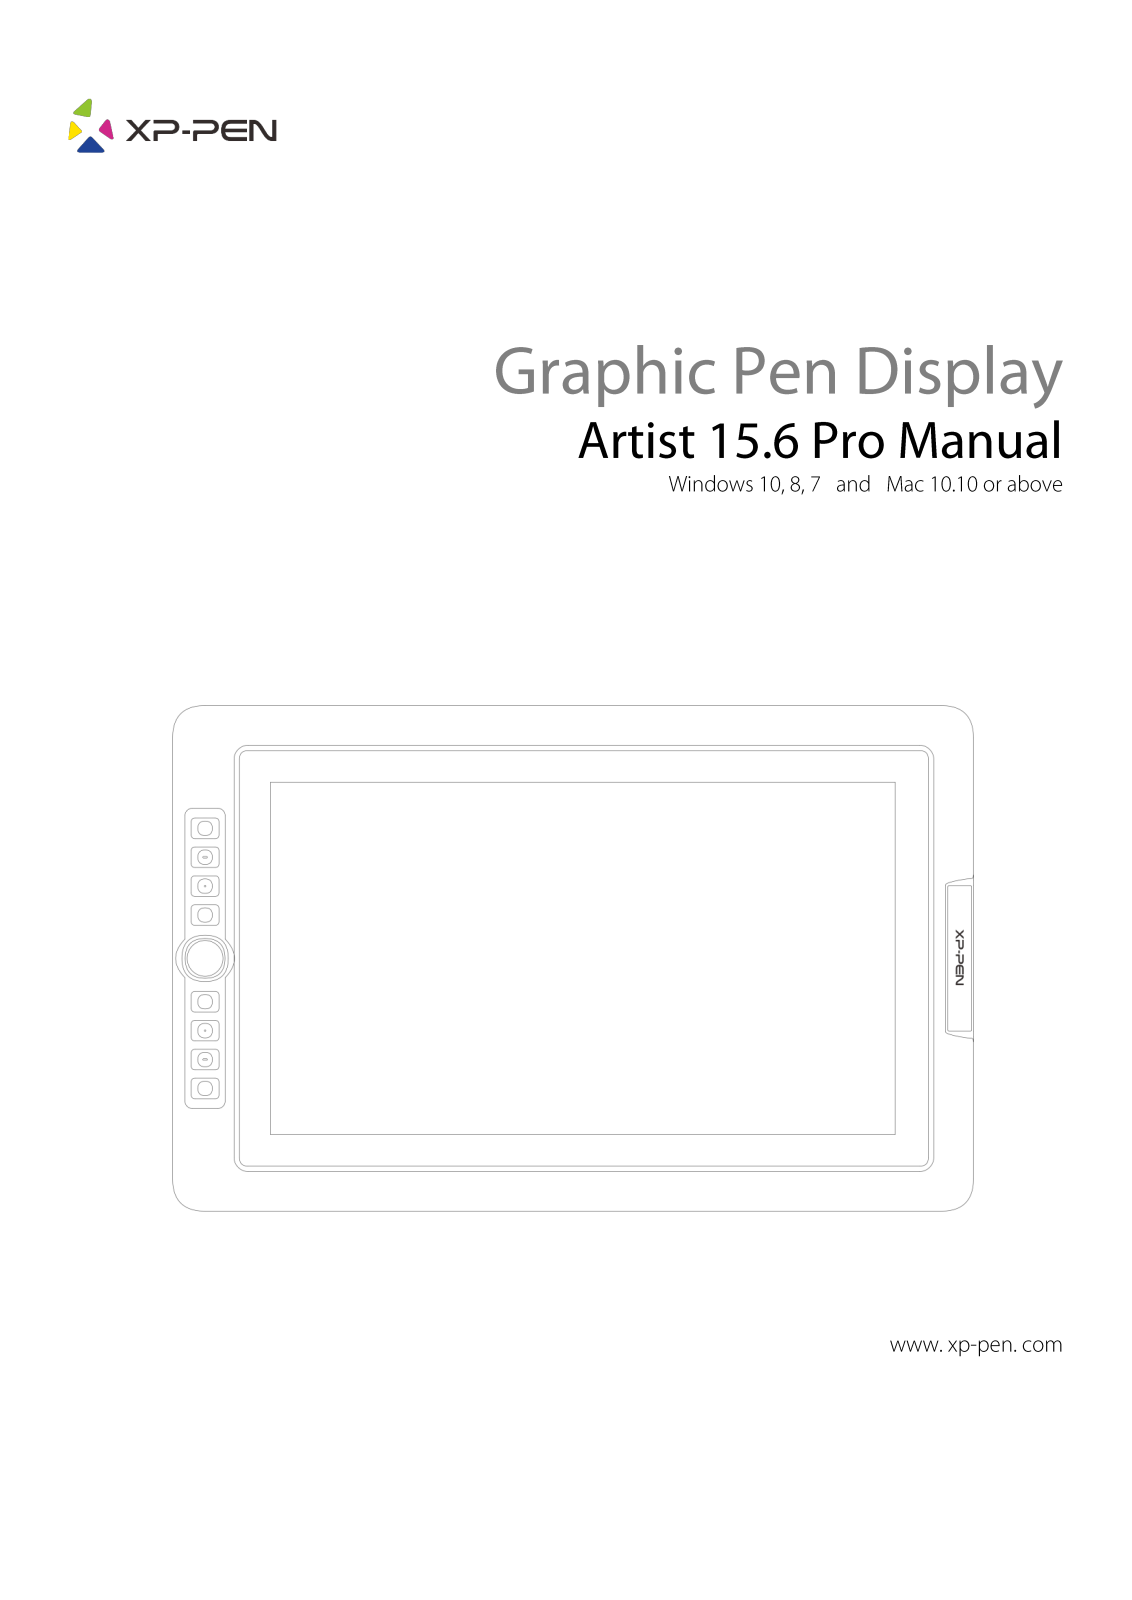 XP-Pen Artist 15.6 Pro User Manual